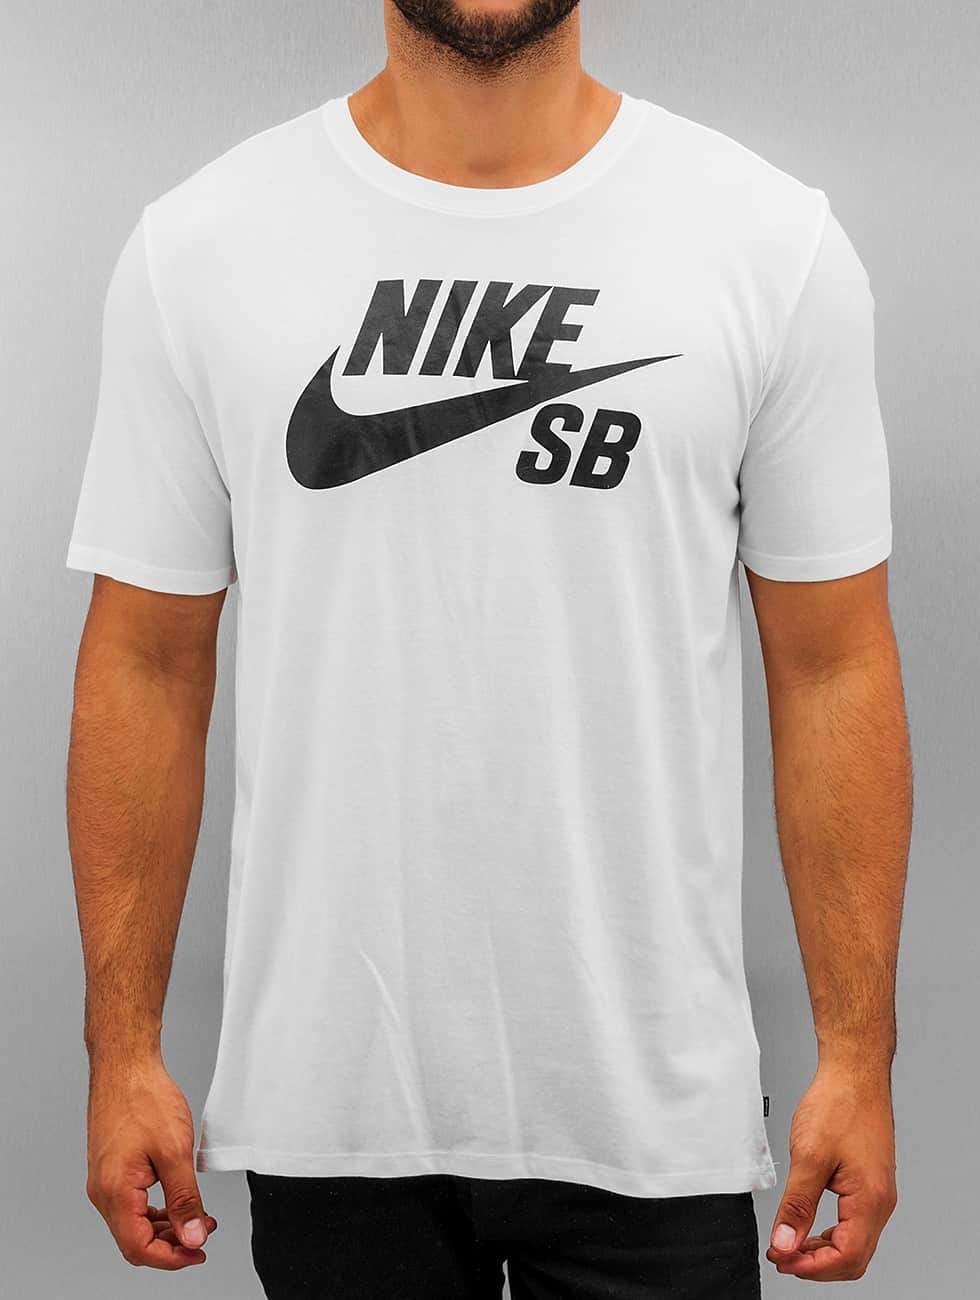 Nike SB Clothing Logo - Nike SB Men T-Shirt SB Logo in white Men's Clothing white / black 60 ...